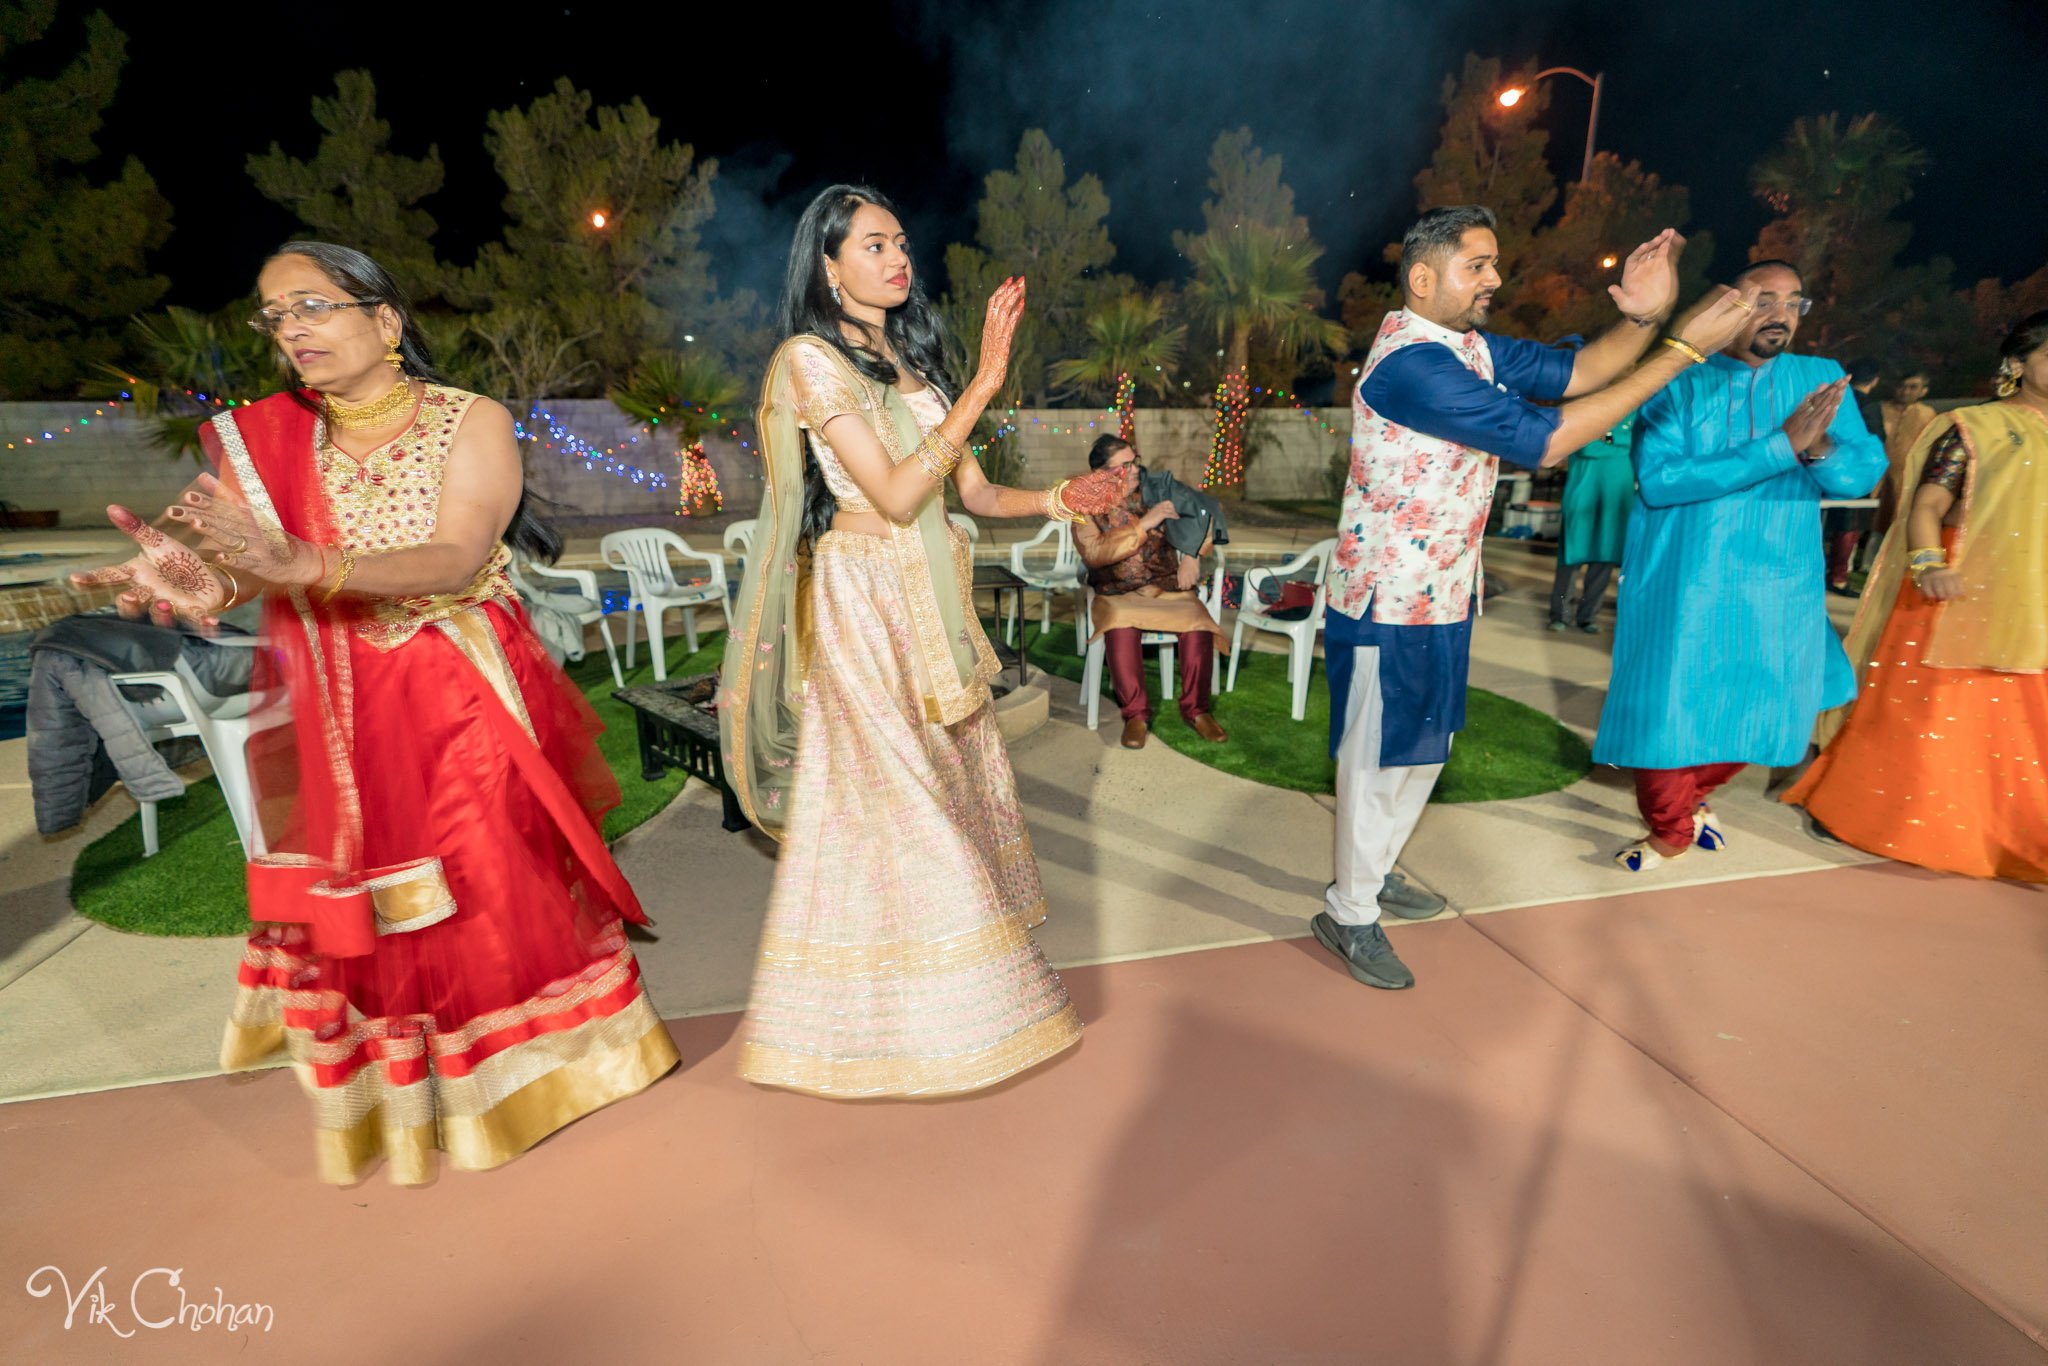 2022-02-04-Hely-&-Parth-Garba-Night-Indian-Wedding-Vik-Chohan-Photography-Photo-Booth-Social-Media-VCP-092.jpg